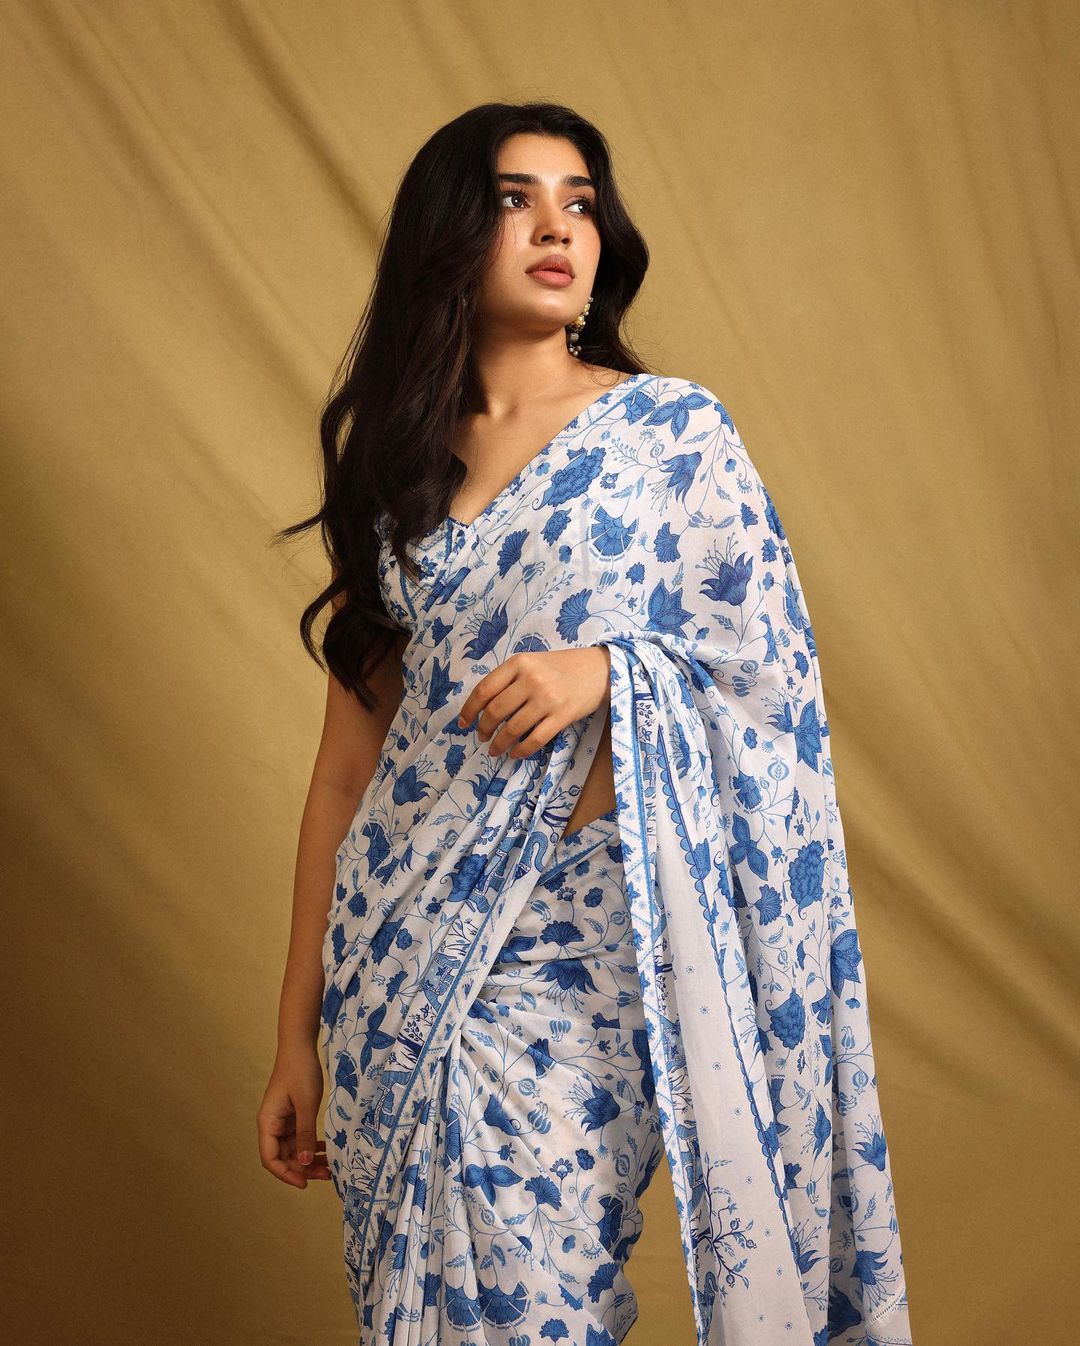 kriti-shetty-gorgeous-looks-in-amazing-white-saree